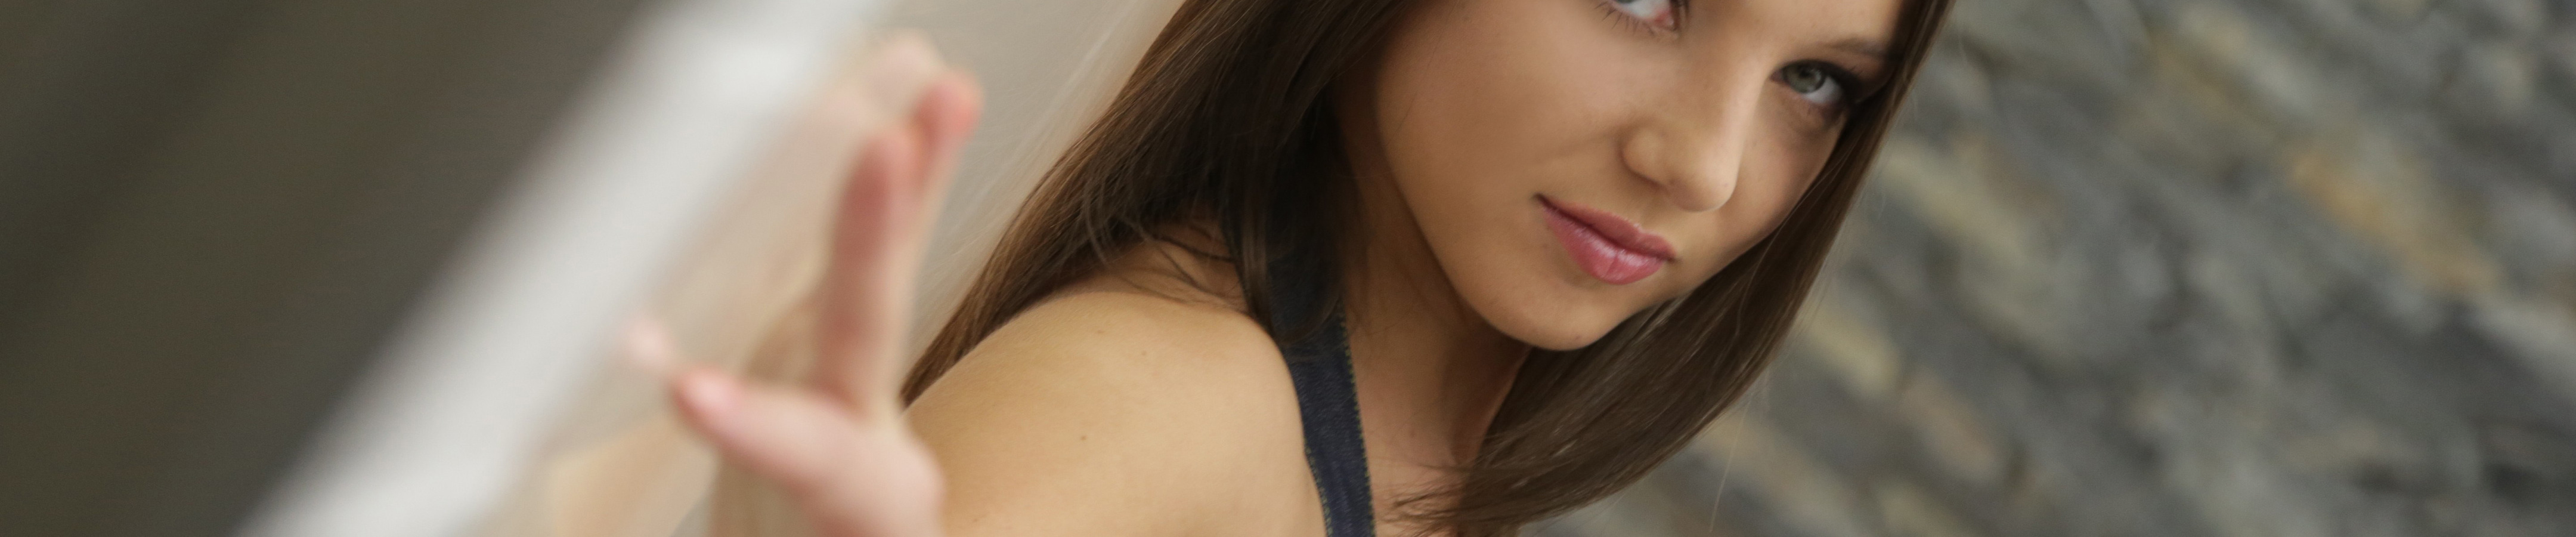 Download Wallpaper Girl Model Brunette Eye Cute Foxy Di Nensi B Section Girls In 